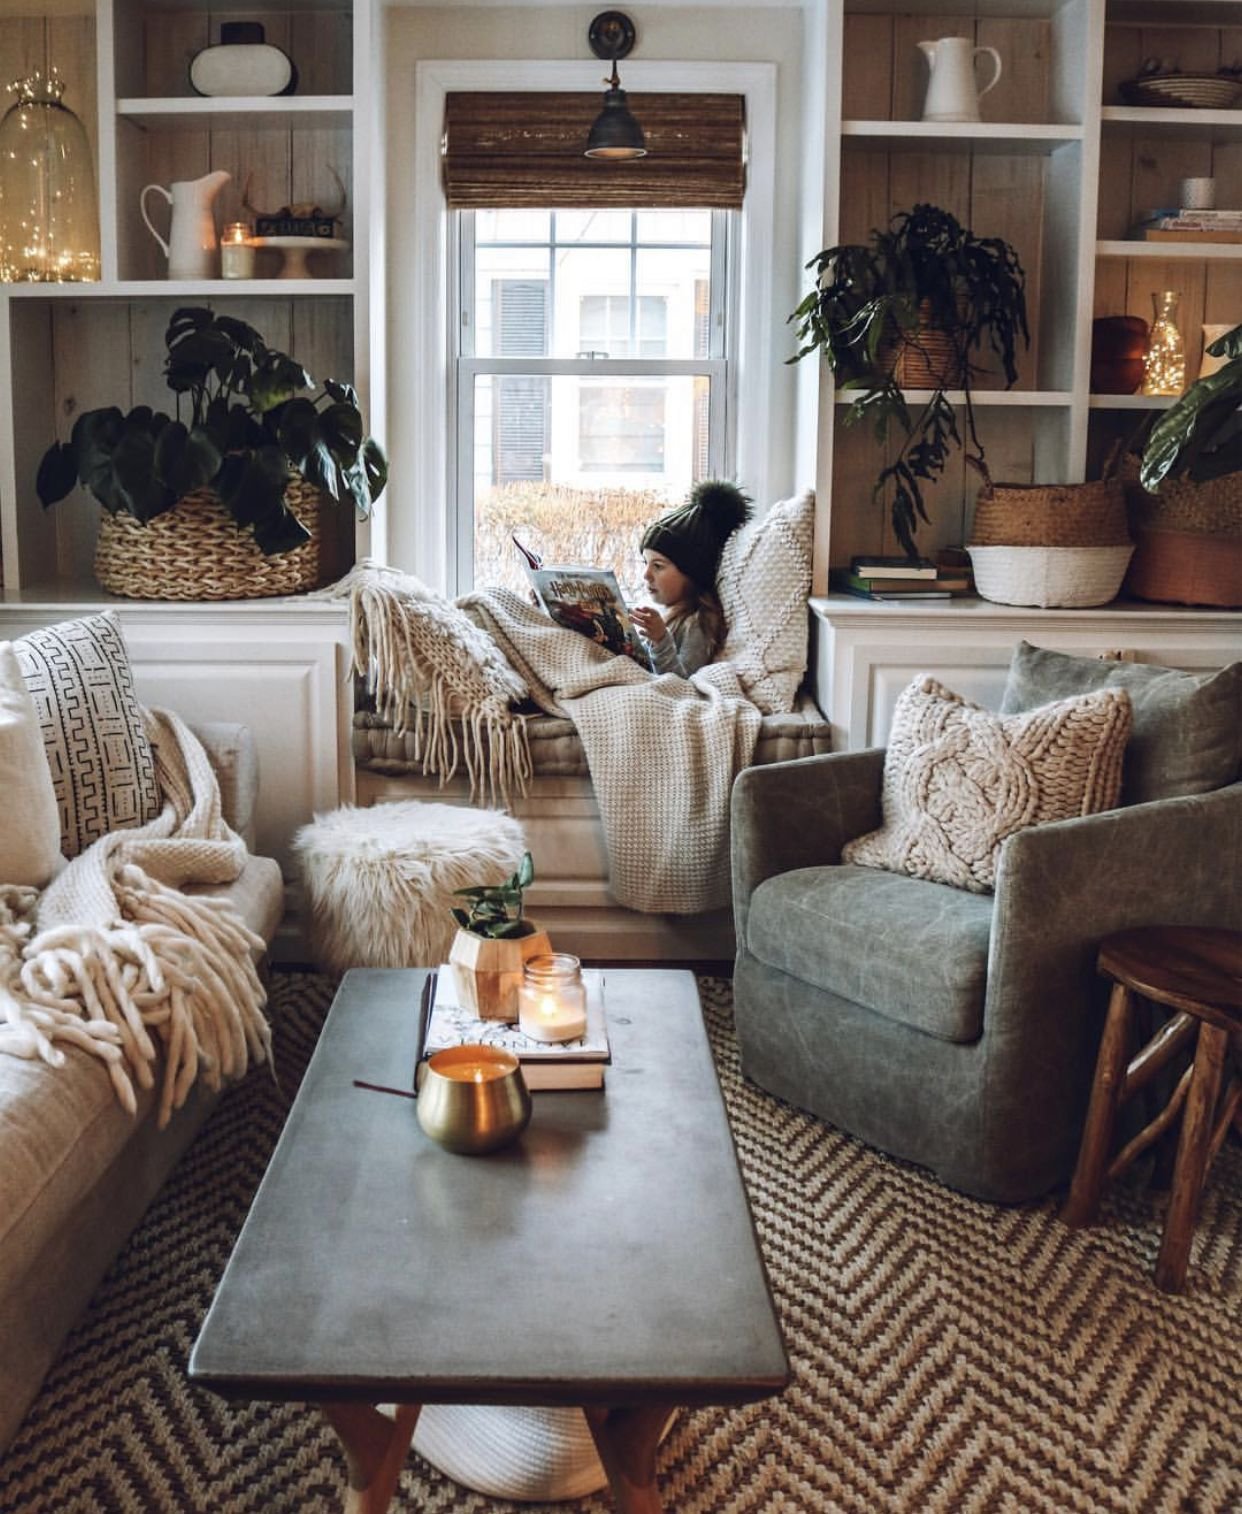 датский стиль в интерьере квартиры